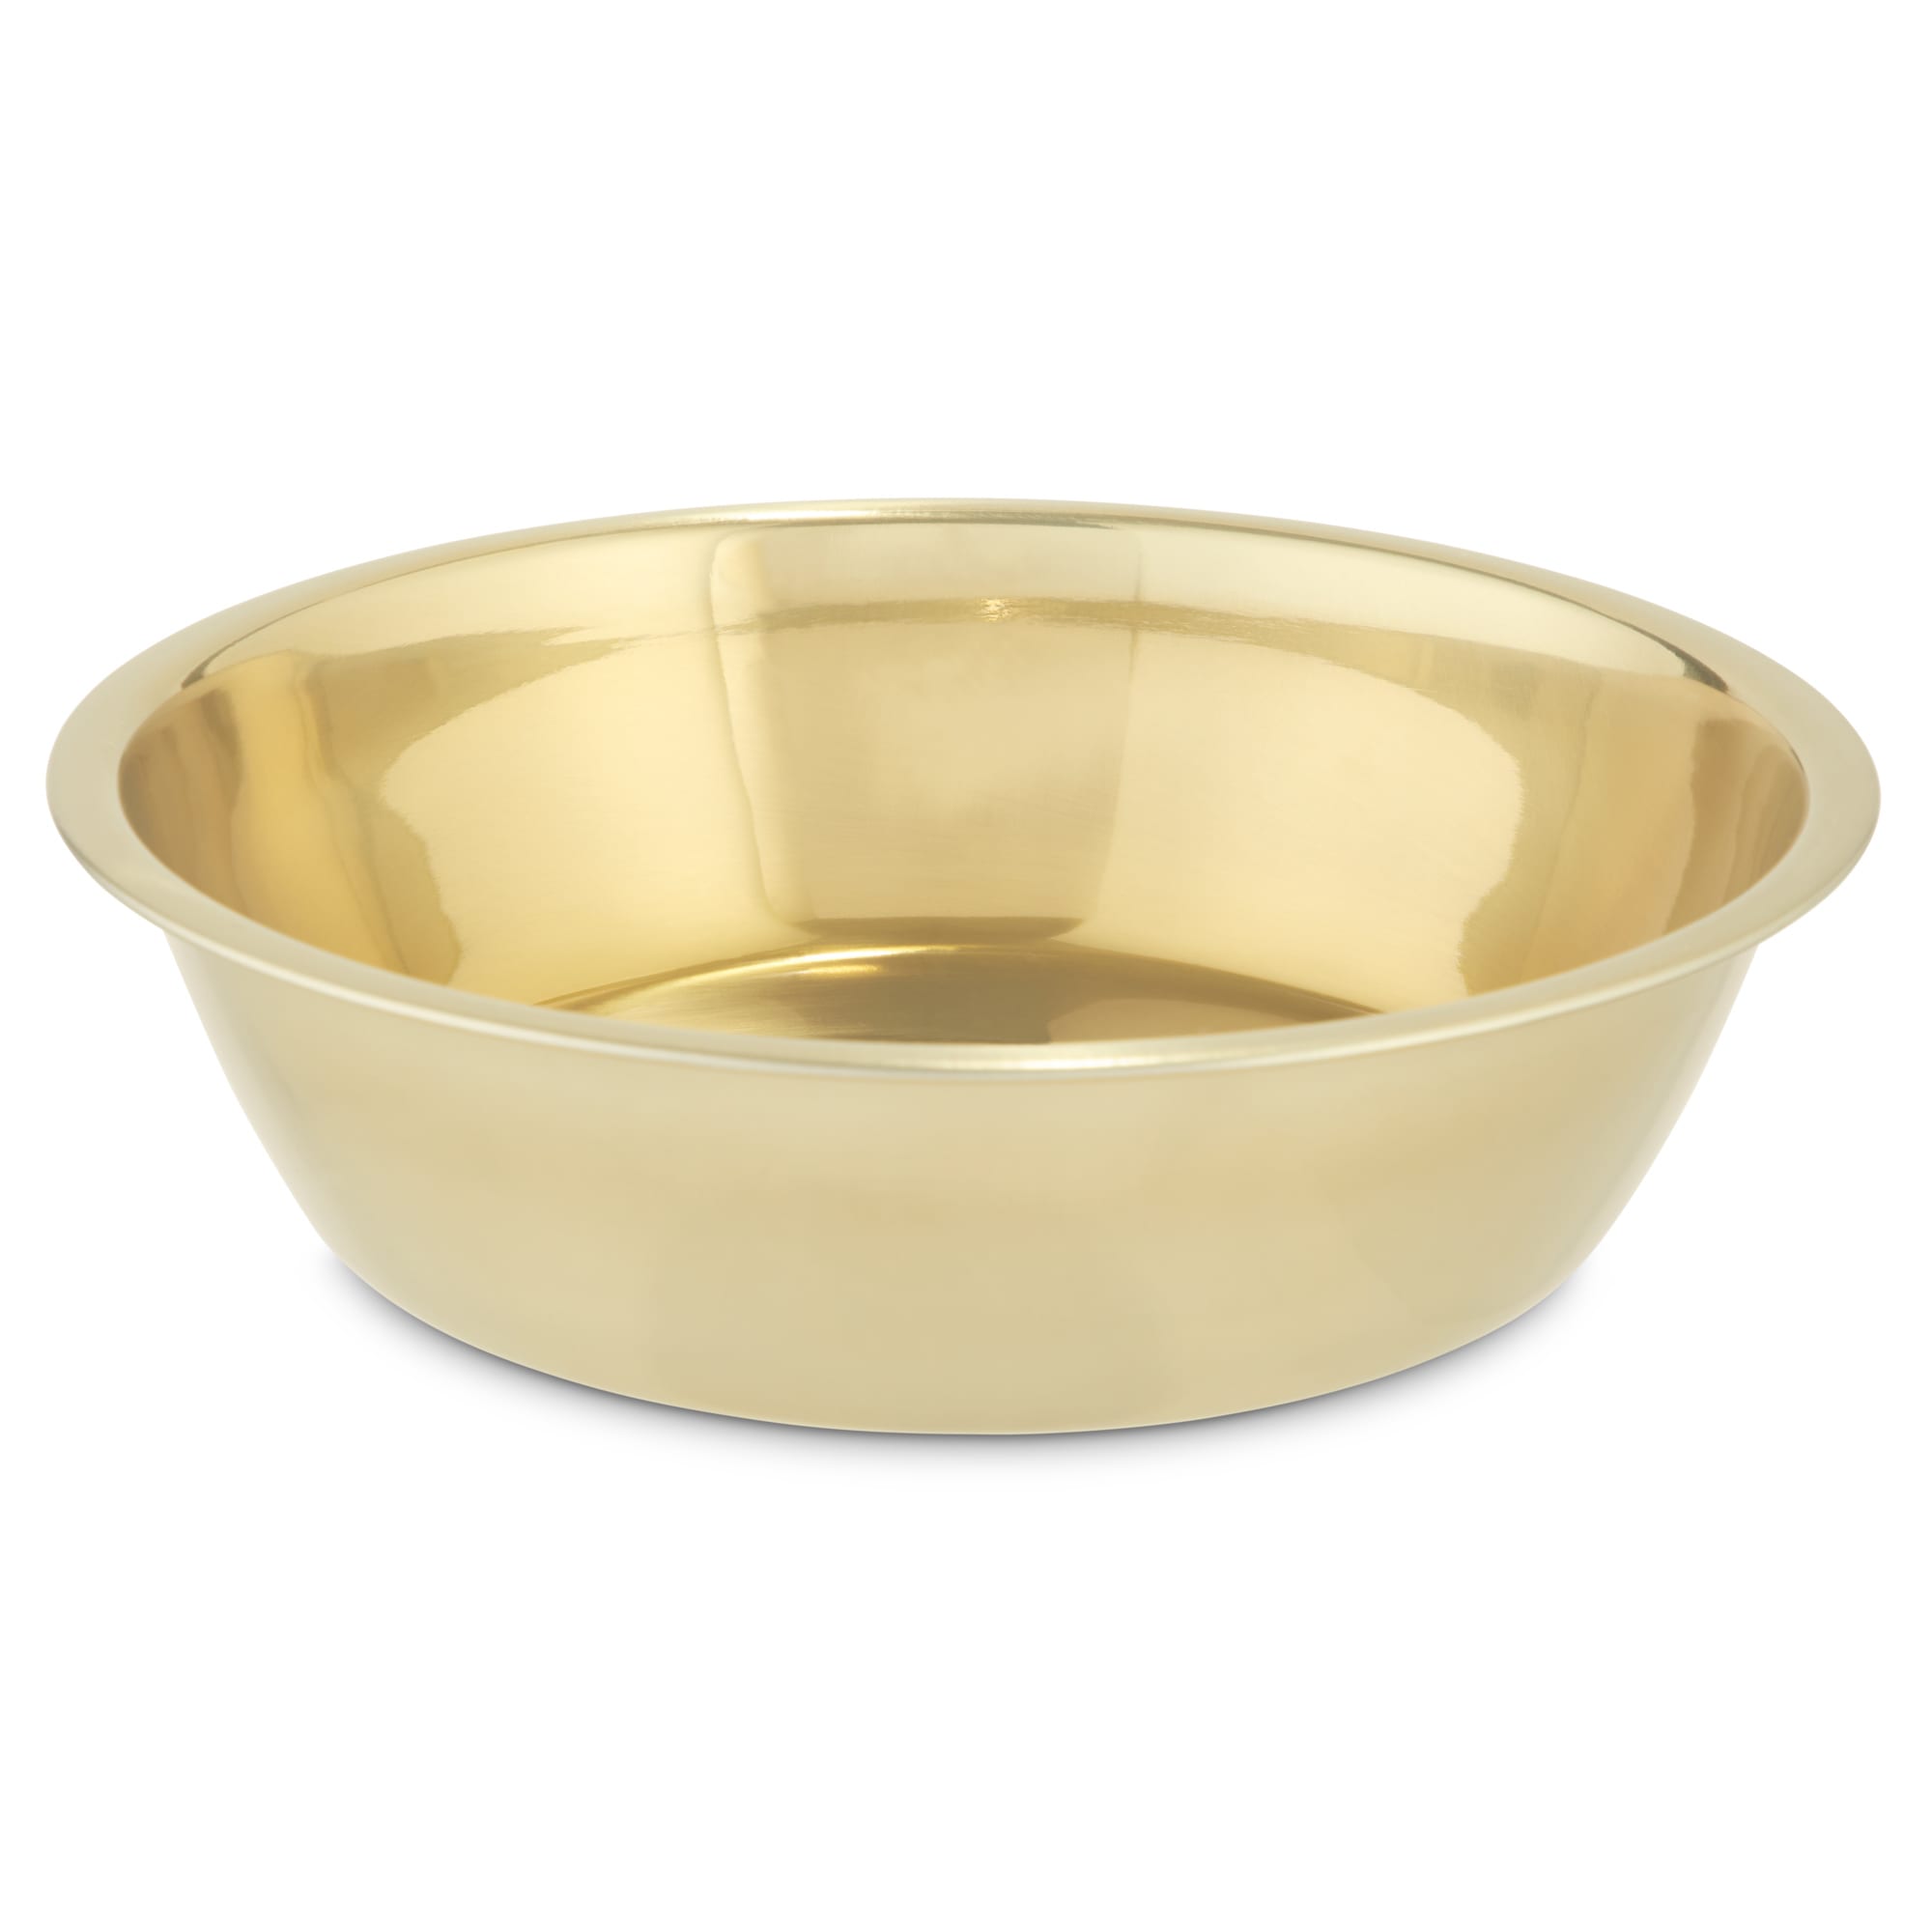 Big Dog Bowl Stainless Steel Gold Pet Bowl